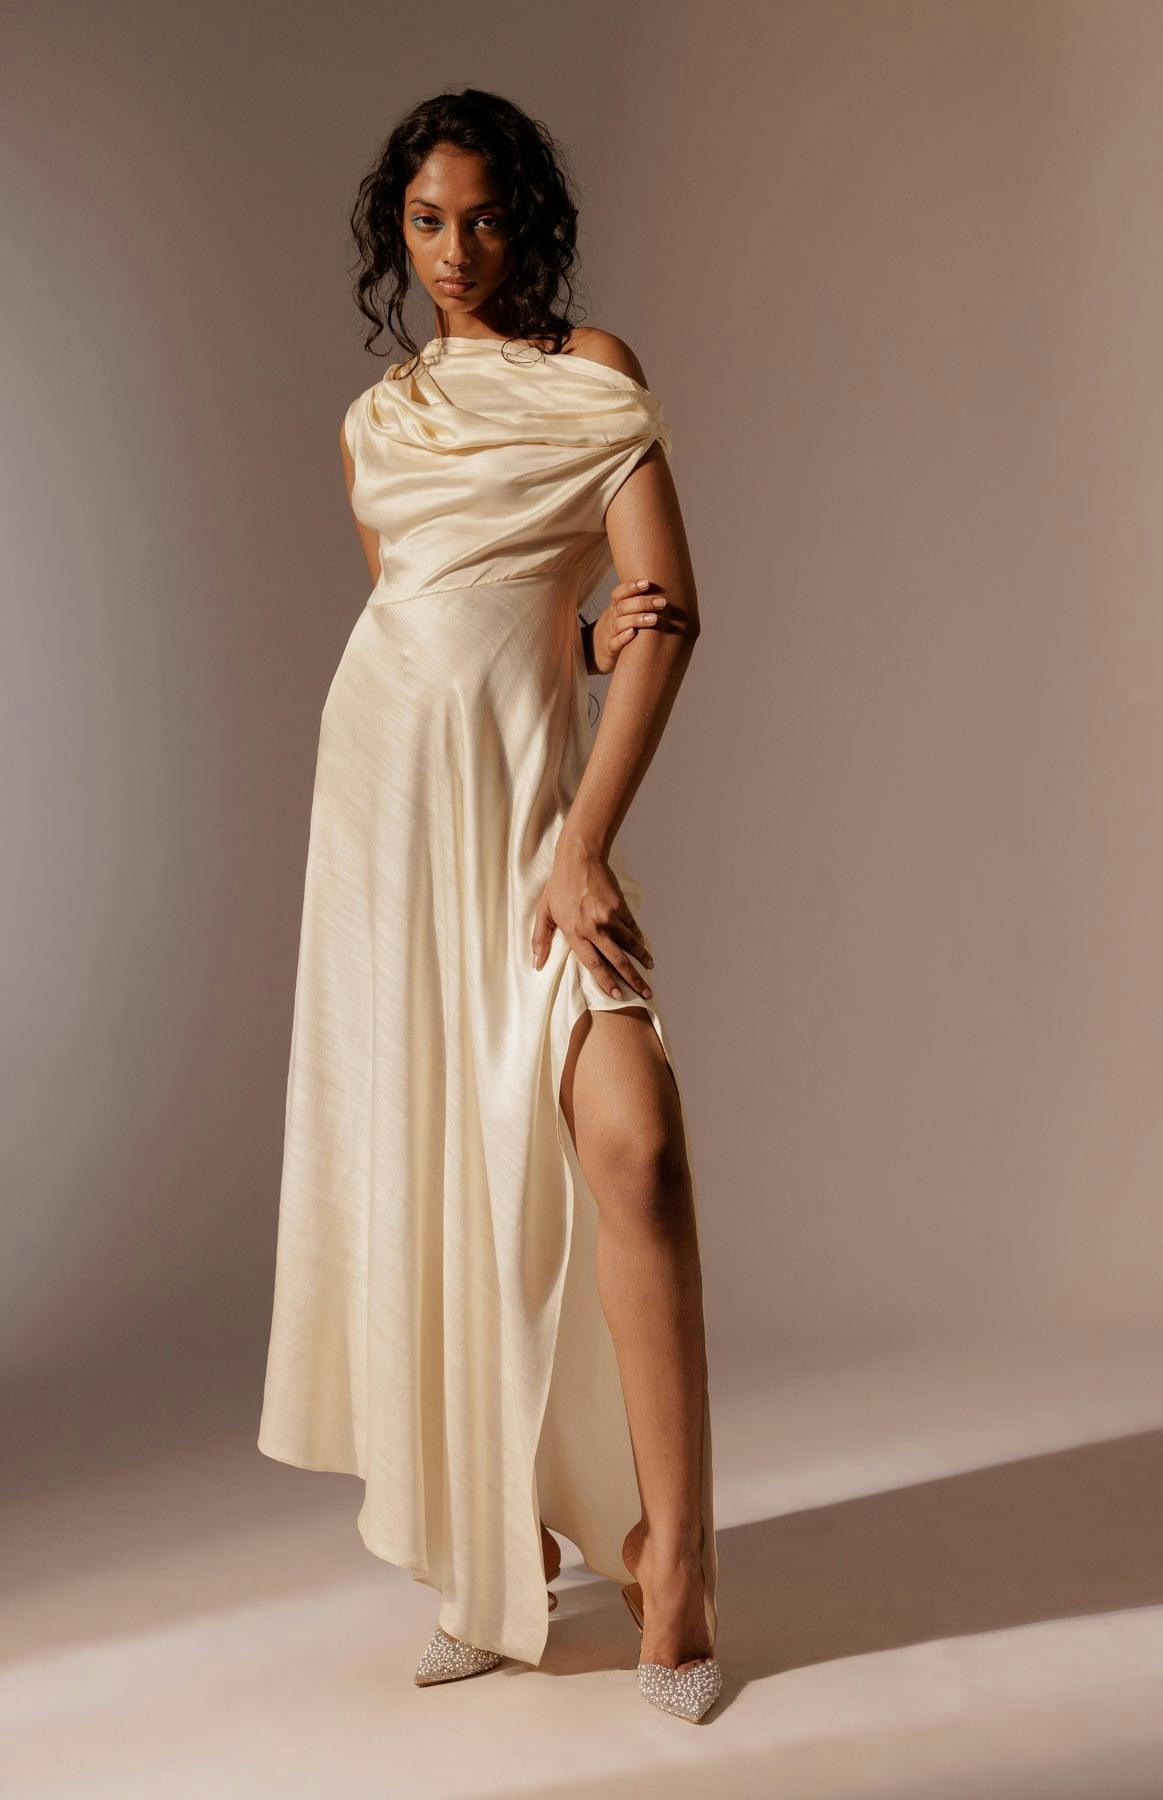 Elio Draped Dress, a product by Advait India